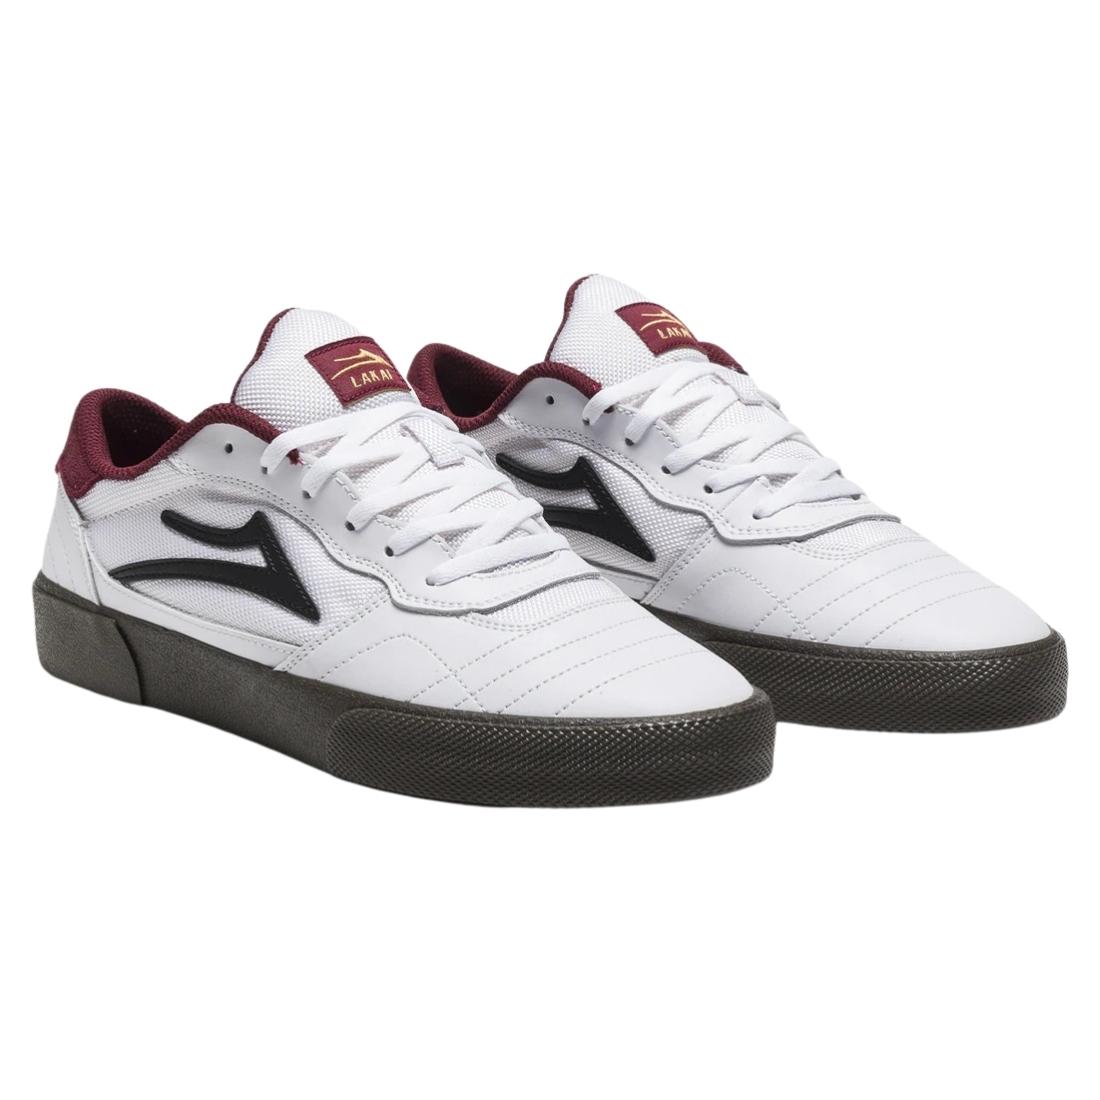 Lakai Cambridge Skate Shoes - White/Gum Leather - Mens Skate Shoes by Lakai